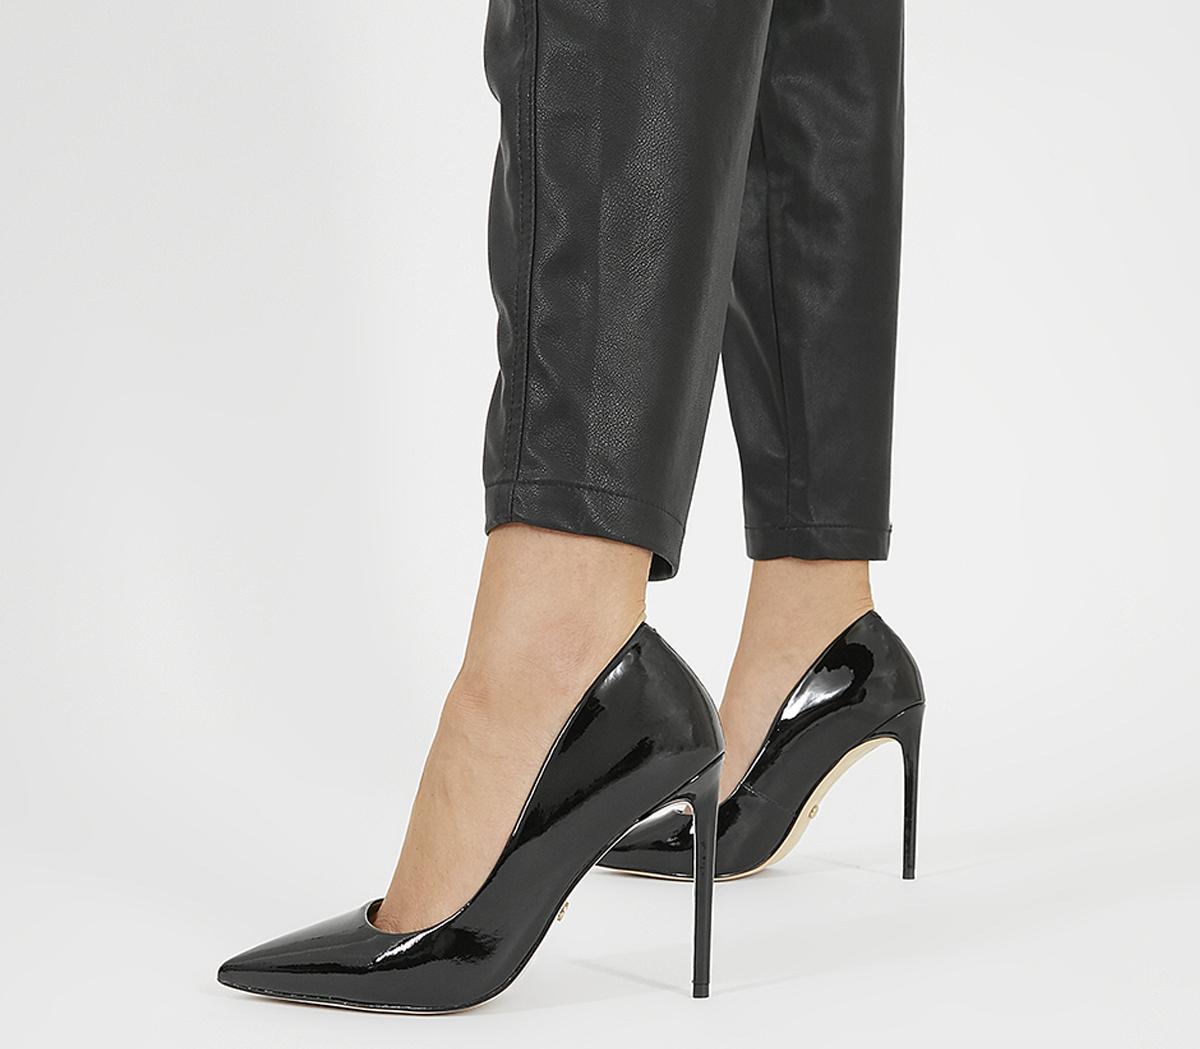 patent leather stiletto heels